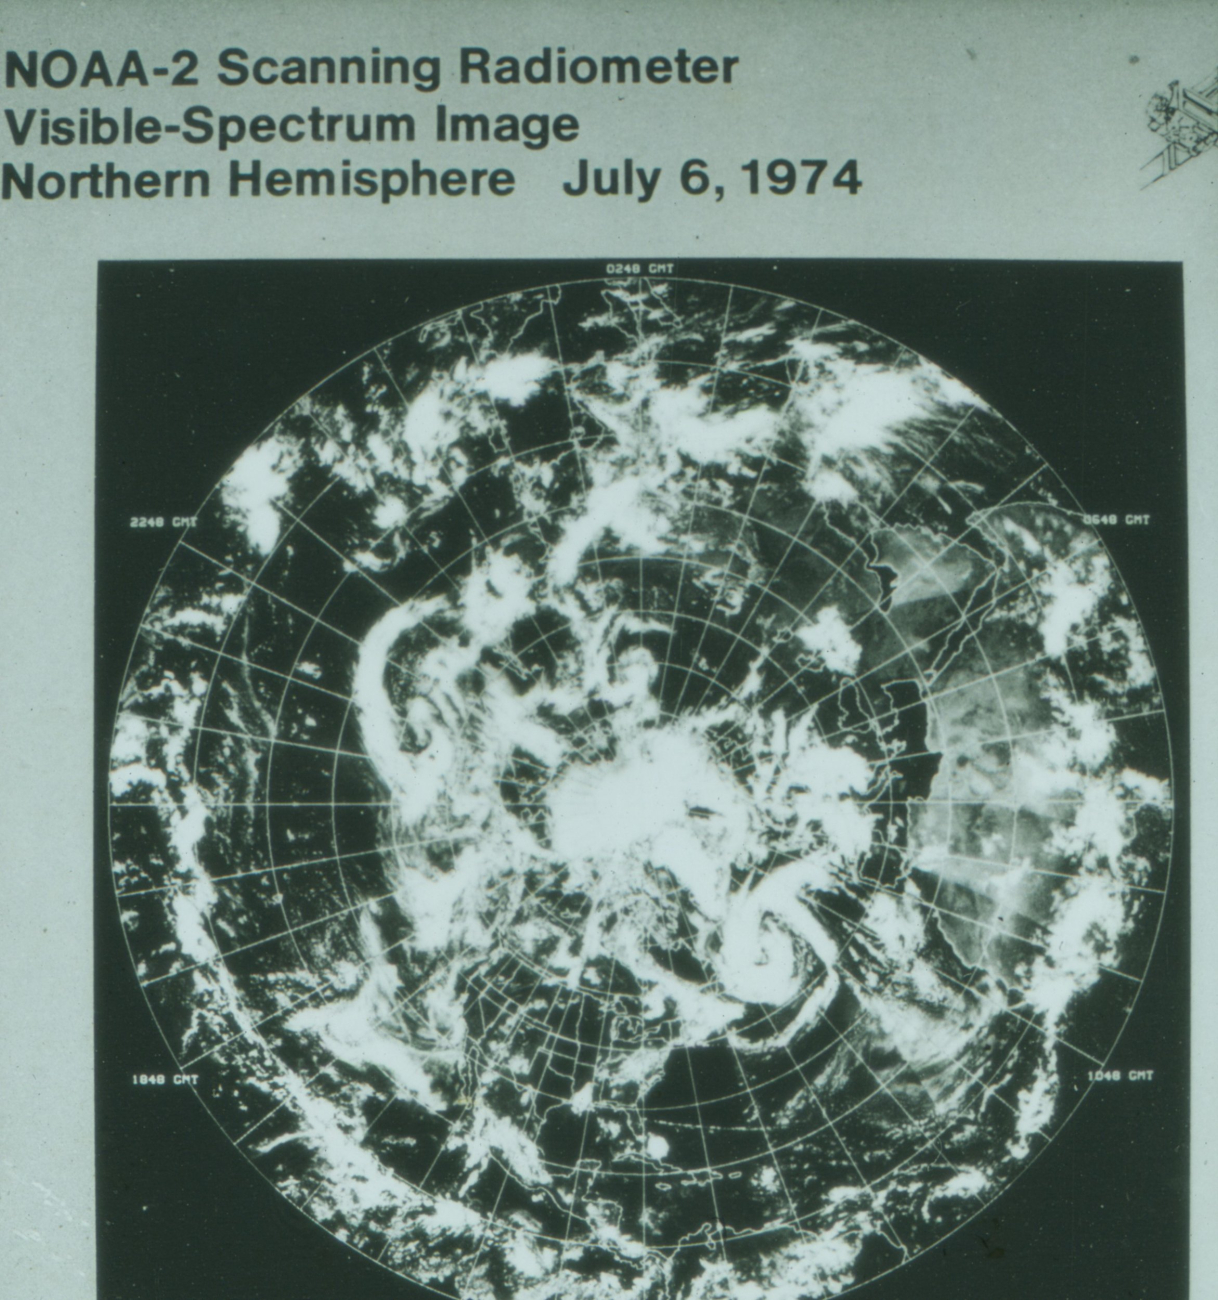 Composite image of Northern hemisphere derived from NOAA-2 scanningradiometer visible-spectrum image